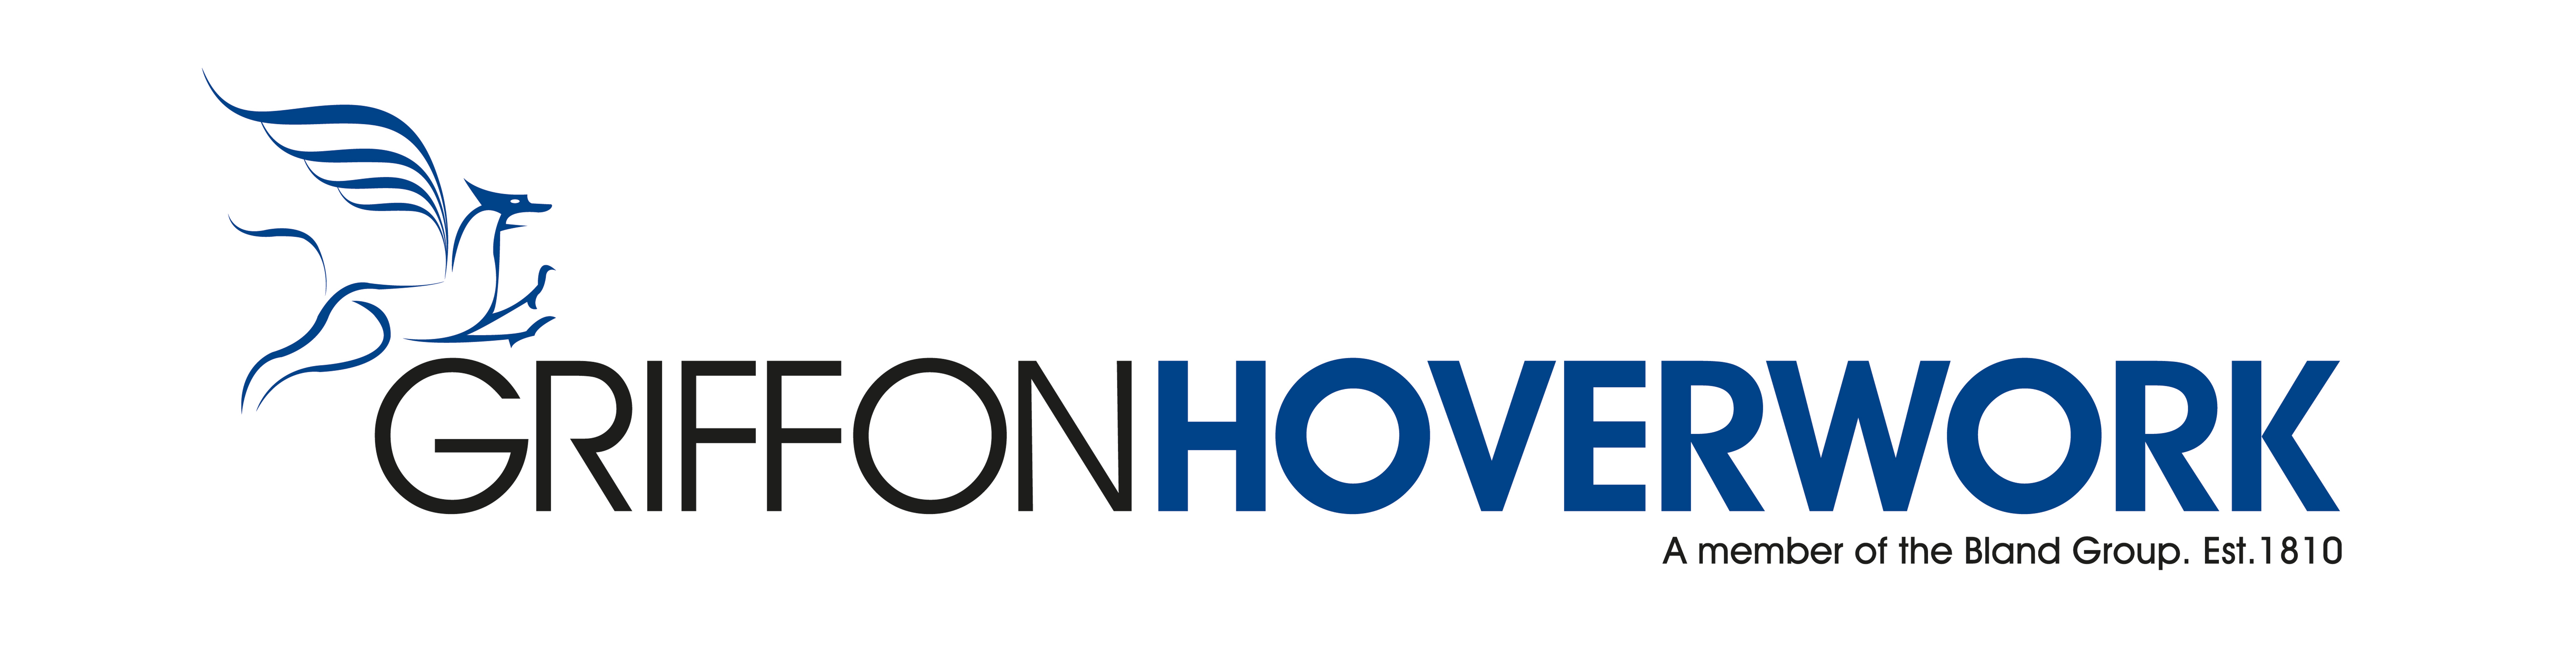 Griffon Hoverwork Logo - Hovercraft Manufacturer and Marine Engineering 